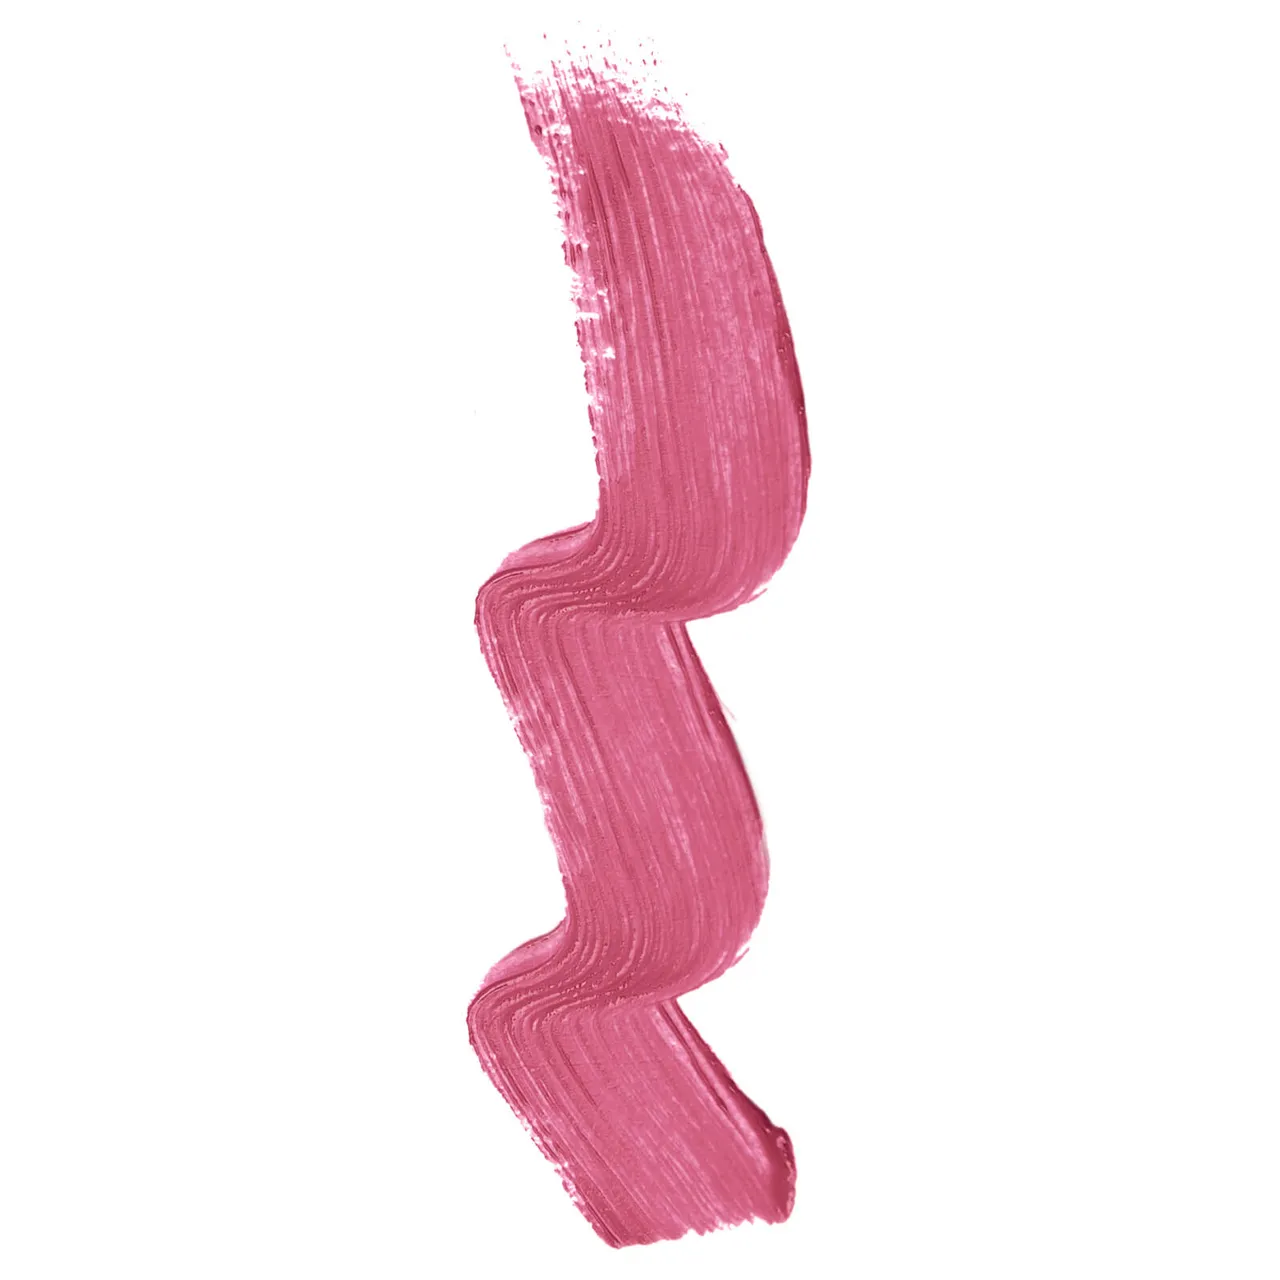 PIXI MatteLast Liquid Lipstick 6.9g (Various Shades) - Prettiest Pink